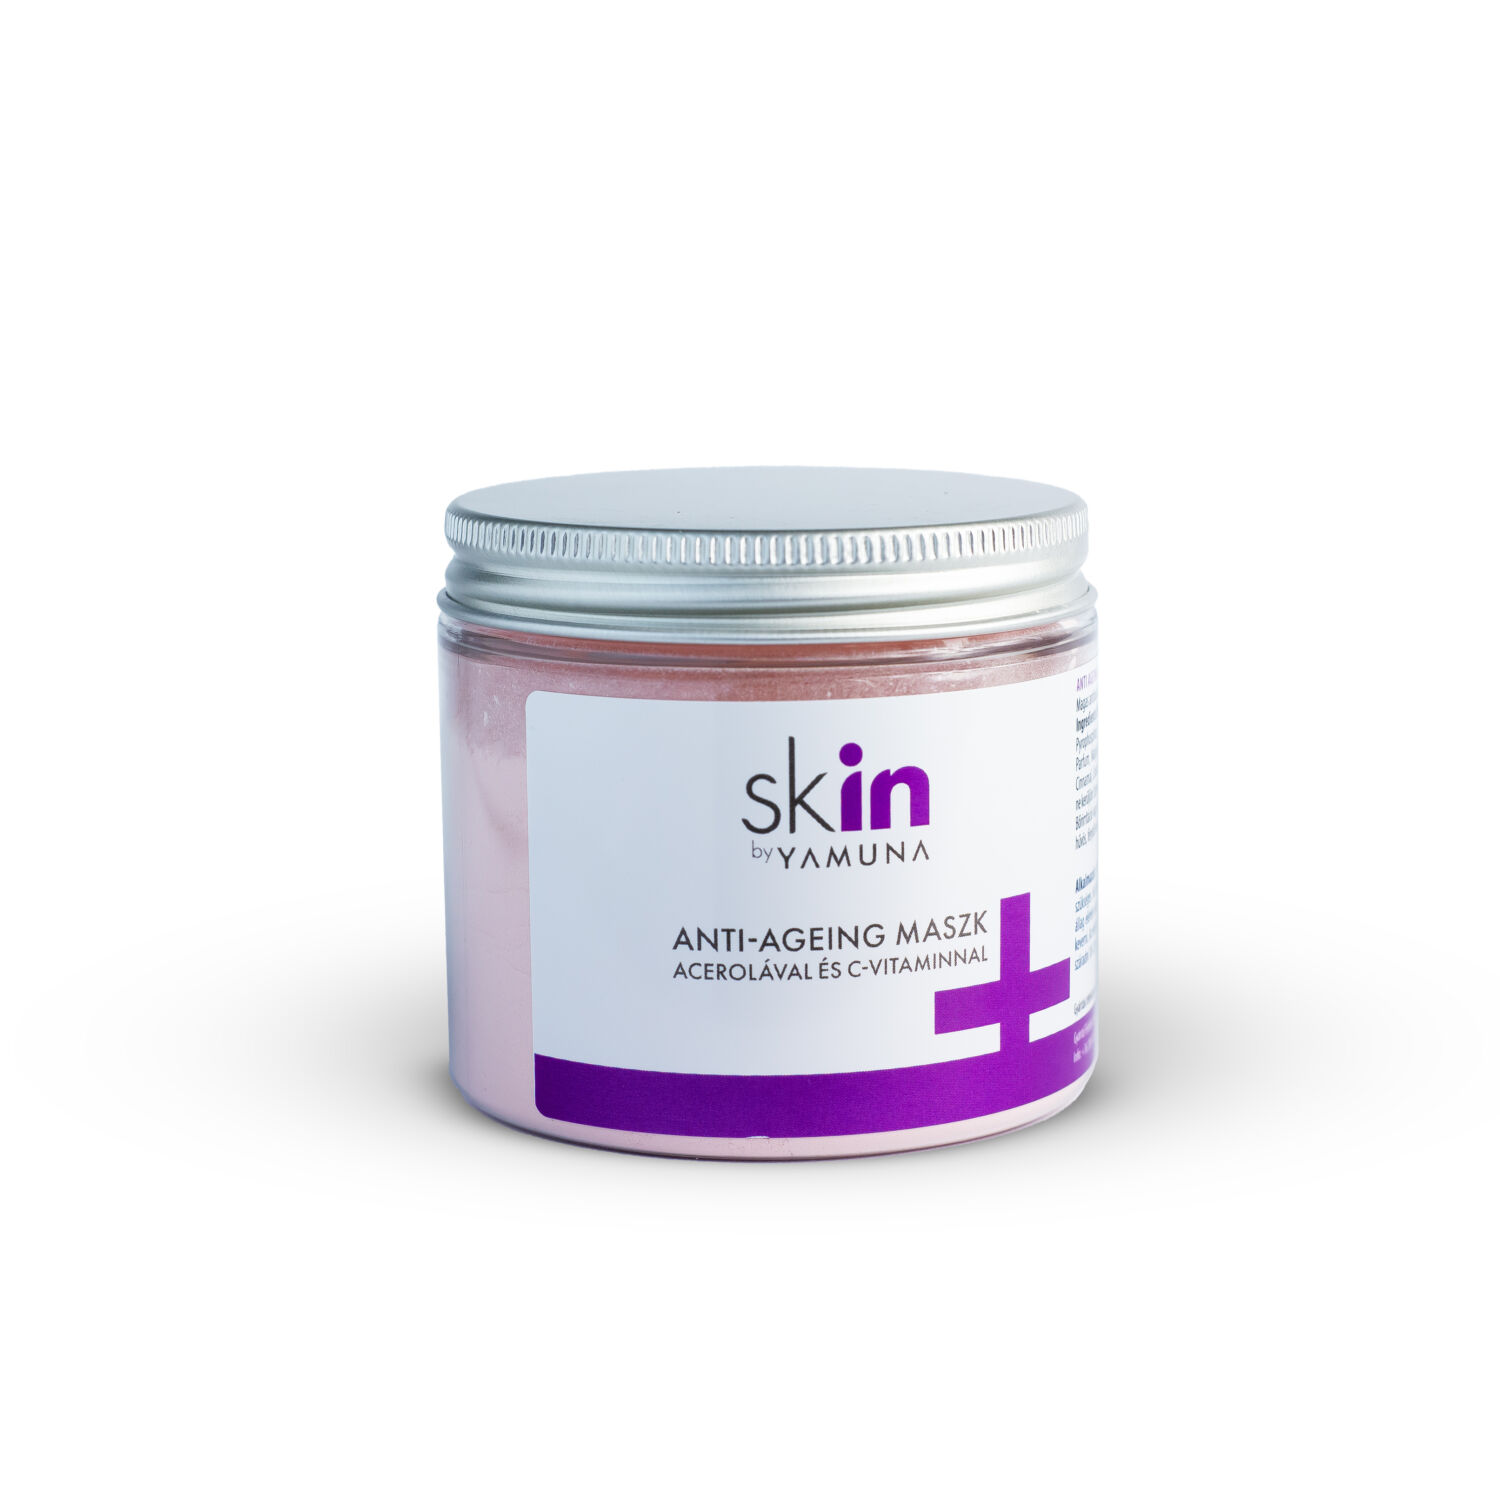 skIN by Yamuna anti-aging maszk acerolával és C-vitaminnal 80g